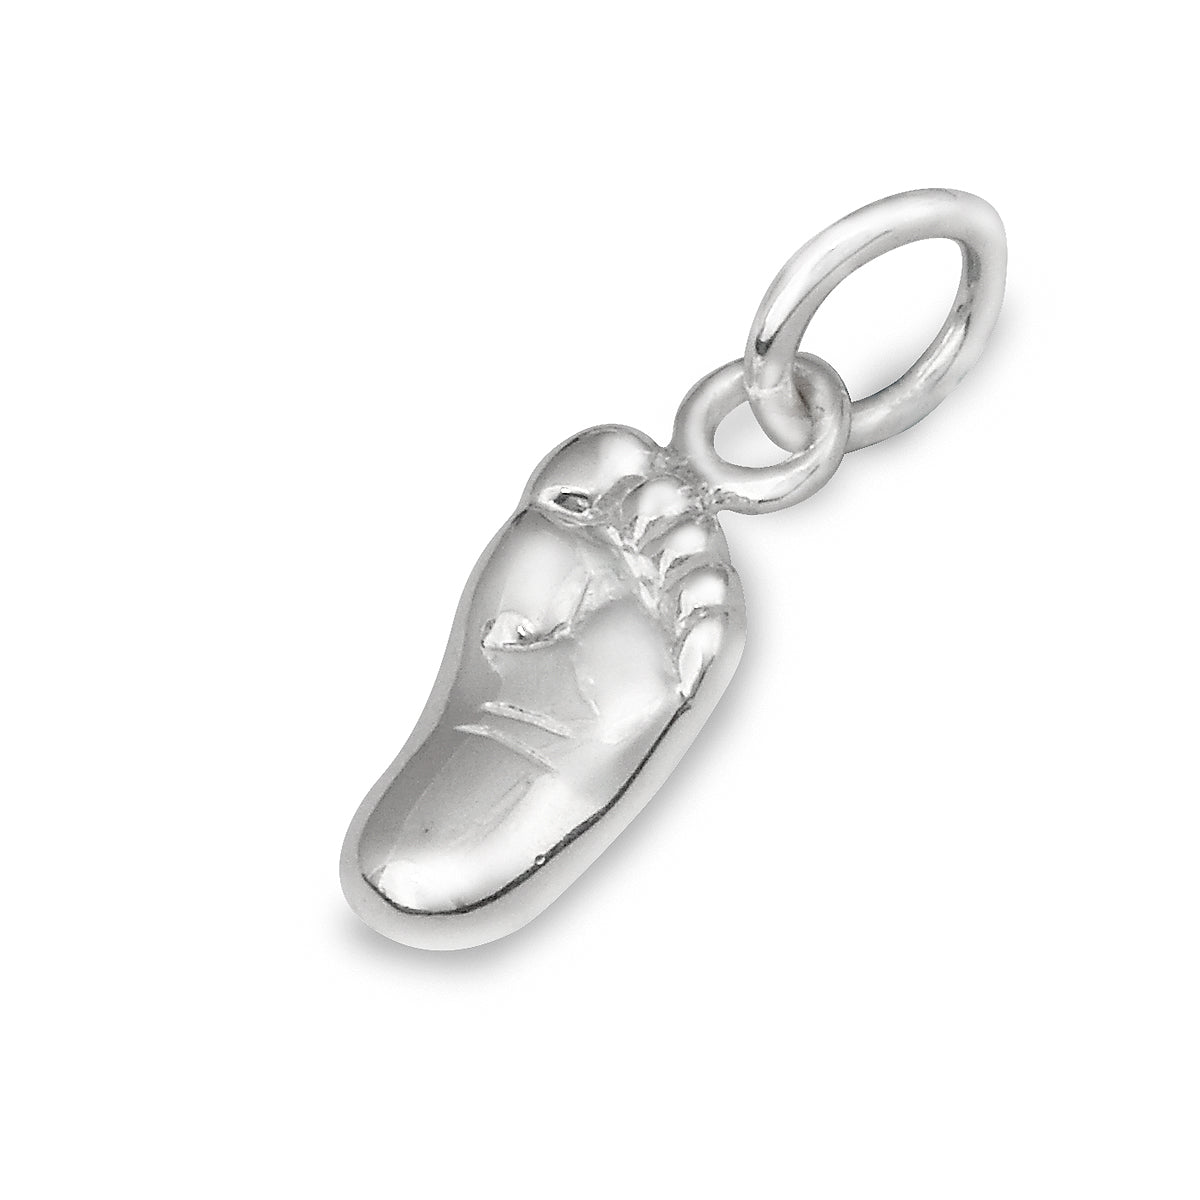 New Baby Silver Charm For Bracelet - gift for new mum